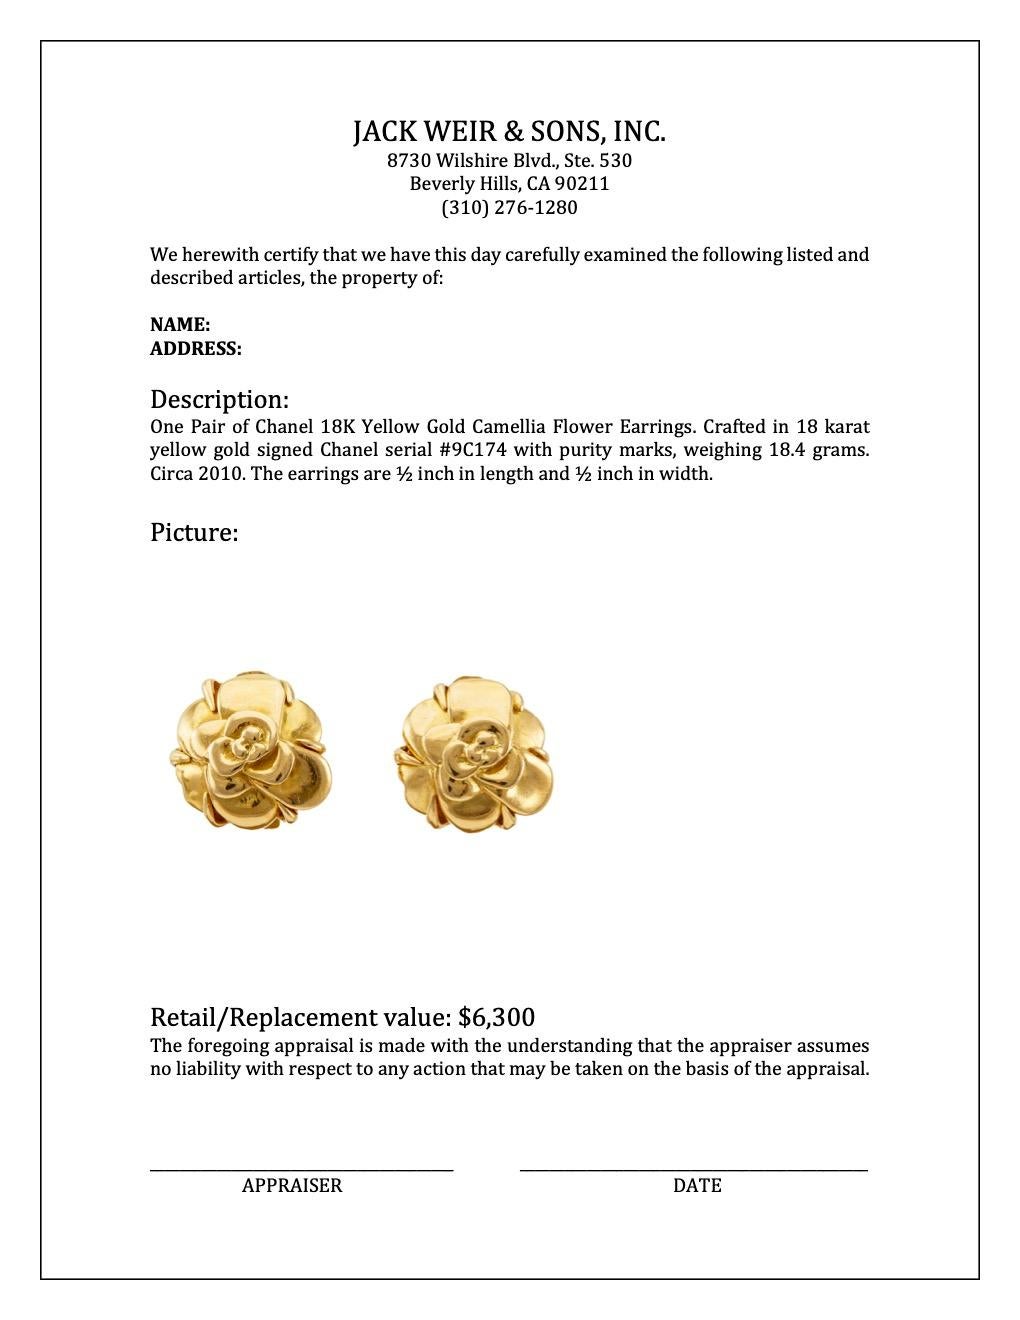 Pair of Chanel 18K Yellow Gold Camellia Flower Earrings 1